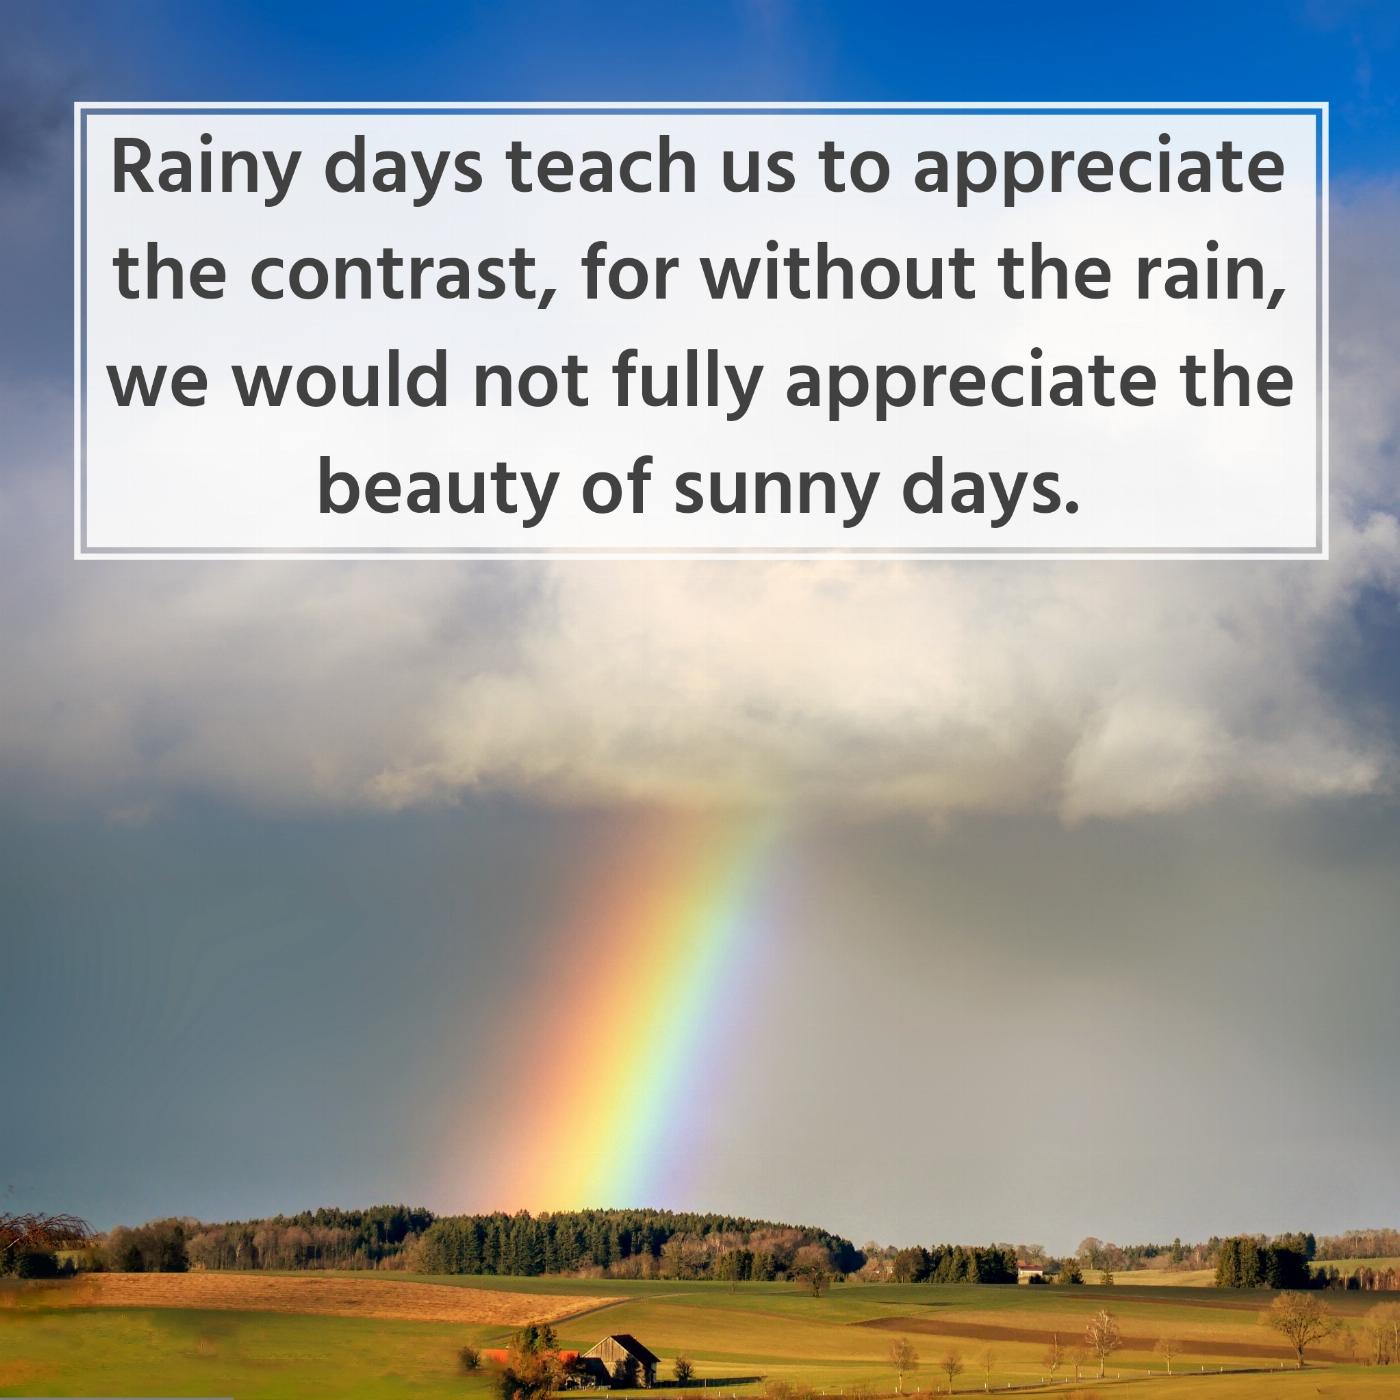 Rainy days teach us to appreciate the contrast